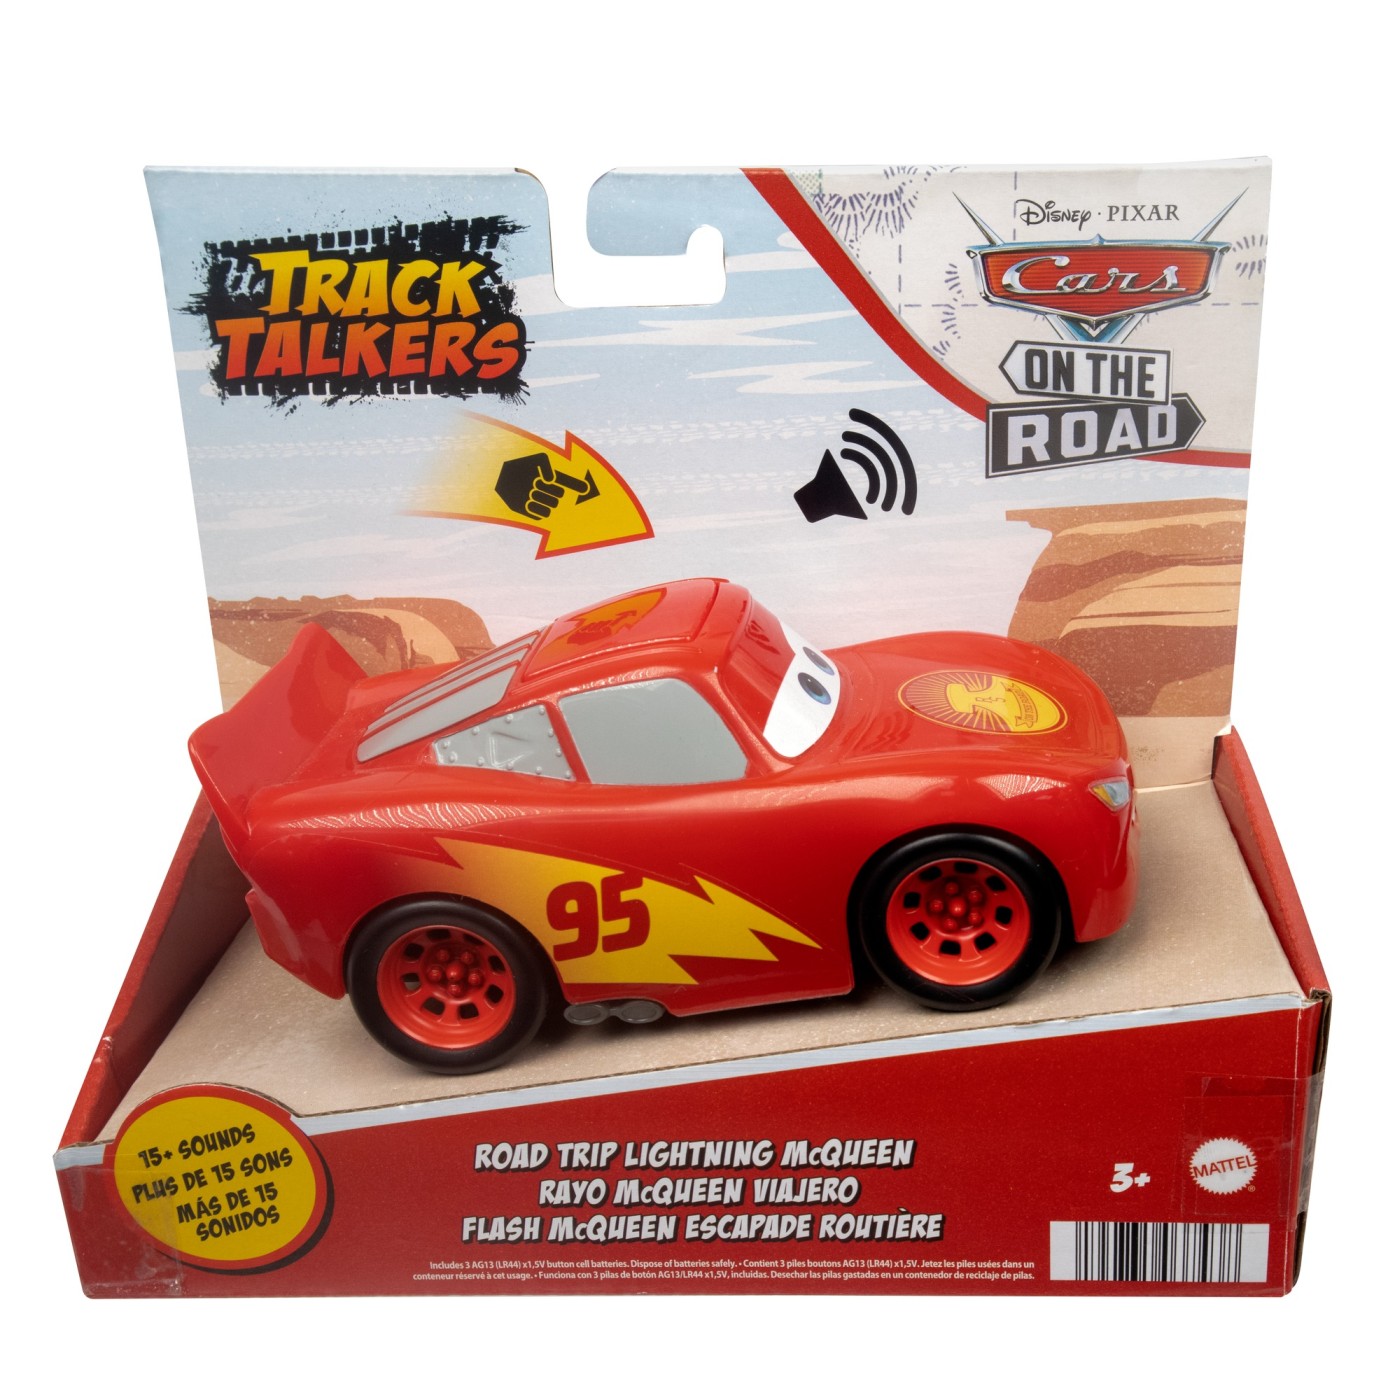 Masina - Disney Cars On The Road - Track Talkers: Road Trip Lightning Mcqueen | Mattel